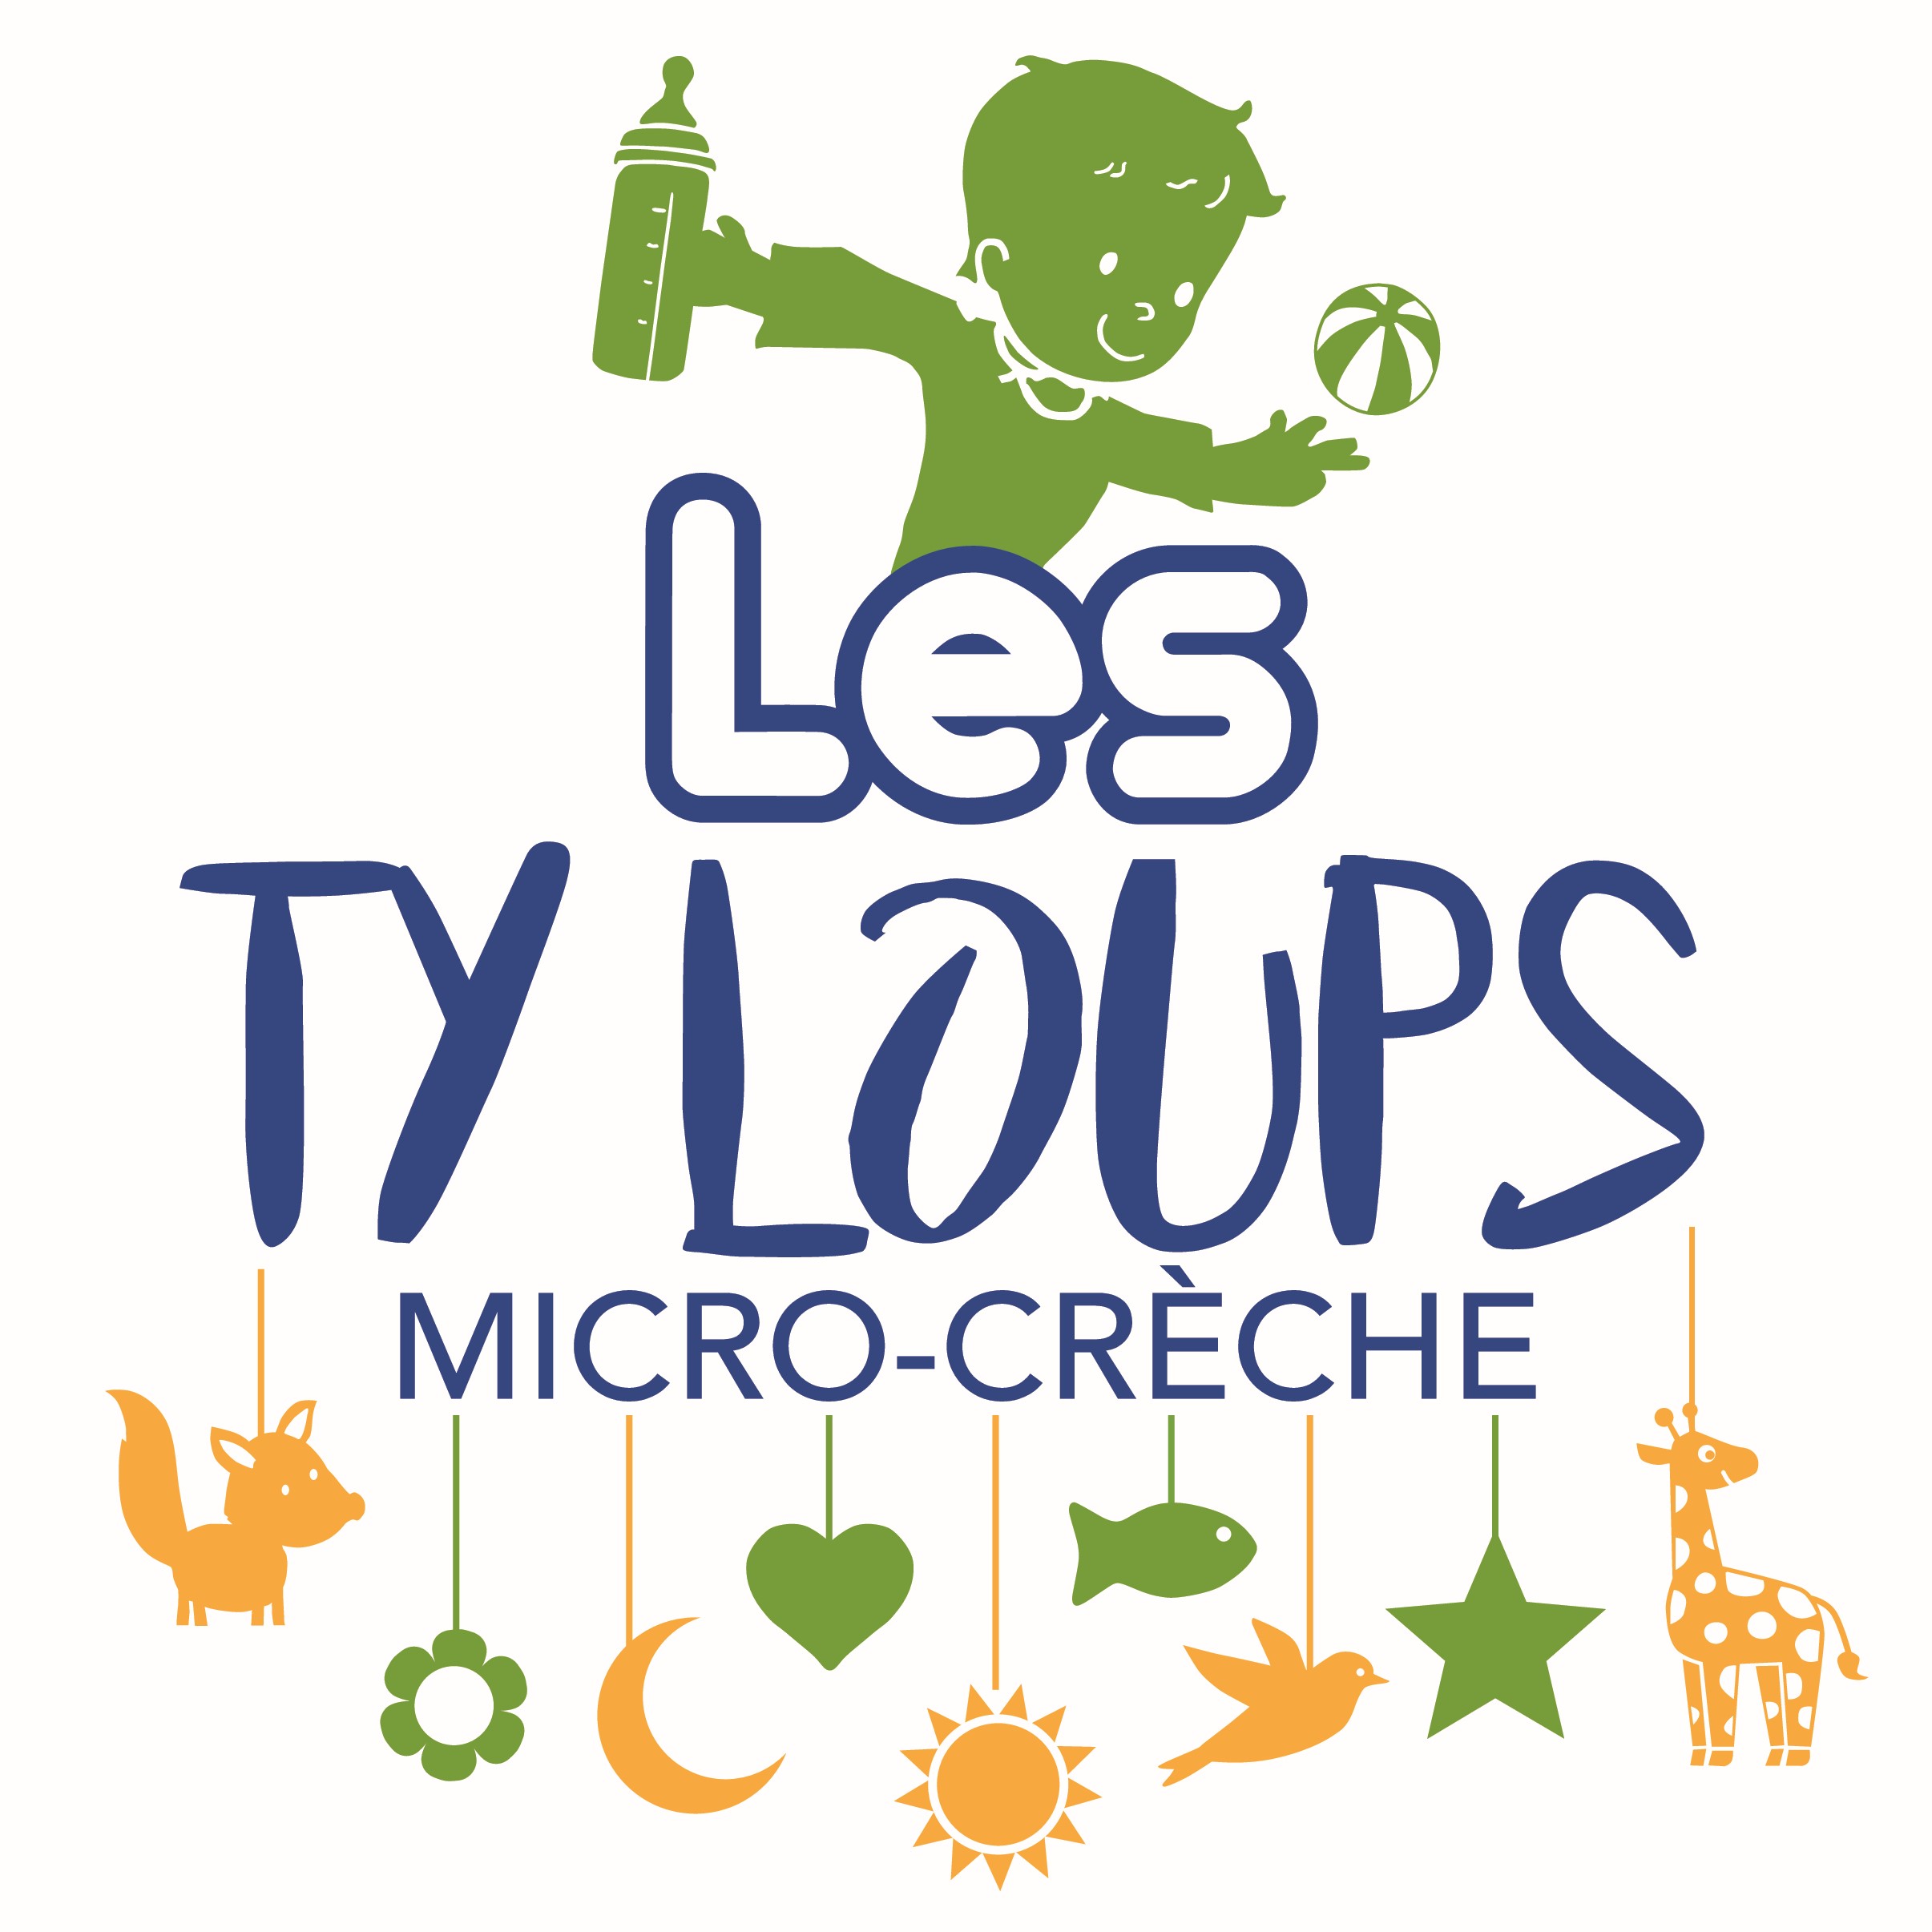 Nantes, Frossay: Micro-crèche les ty loups